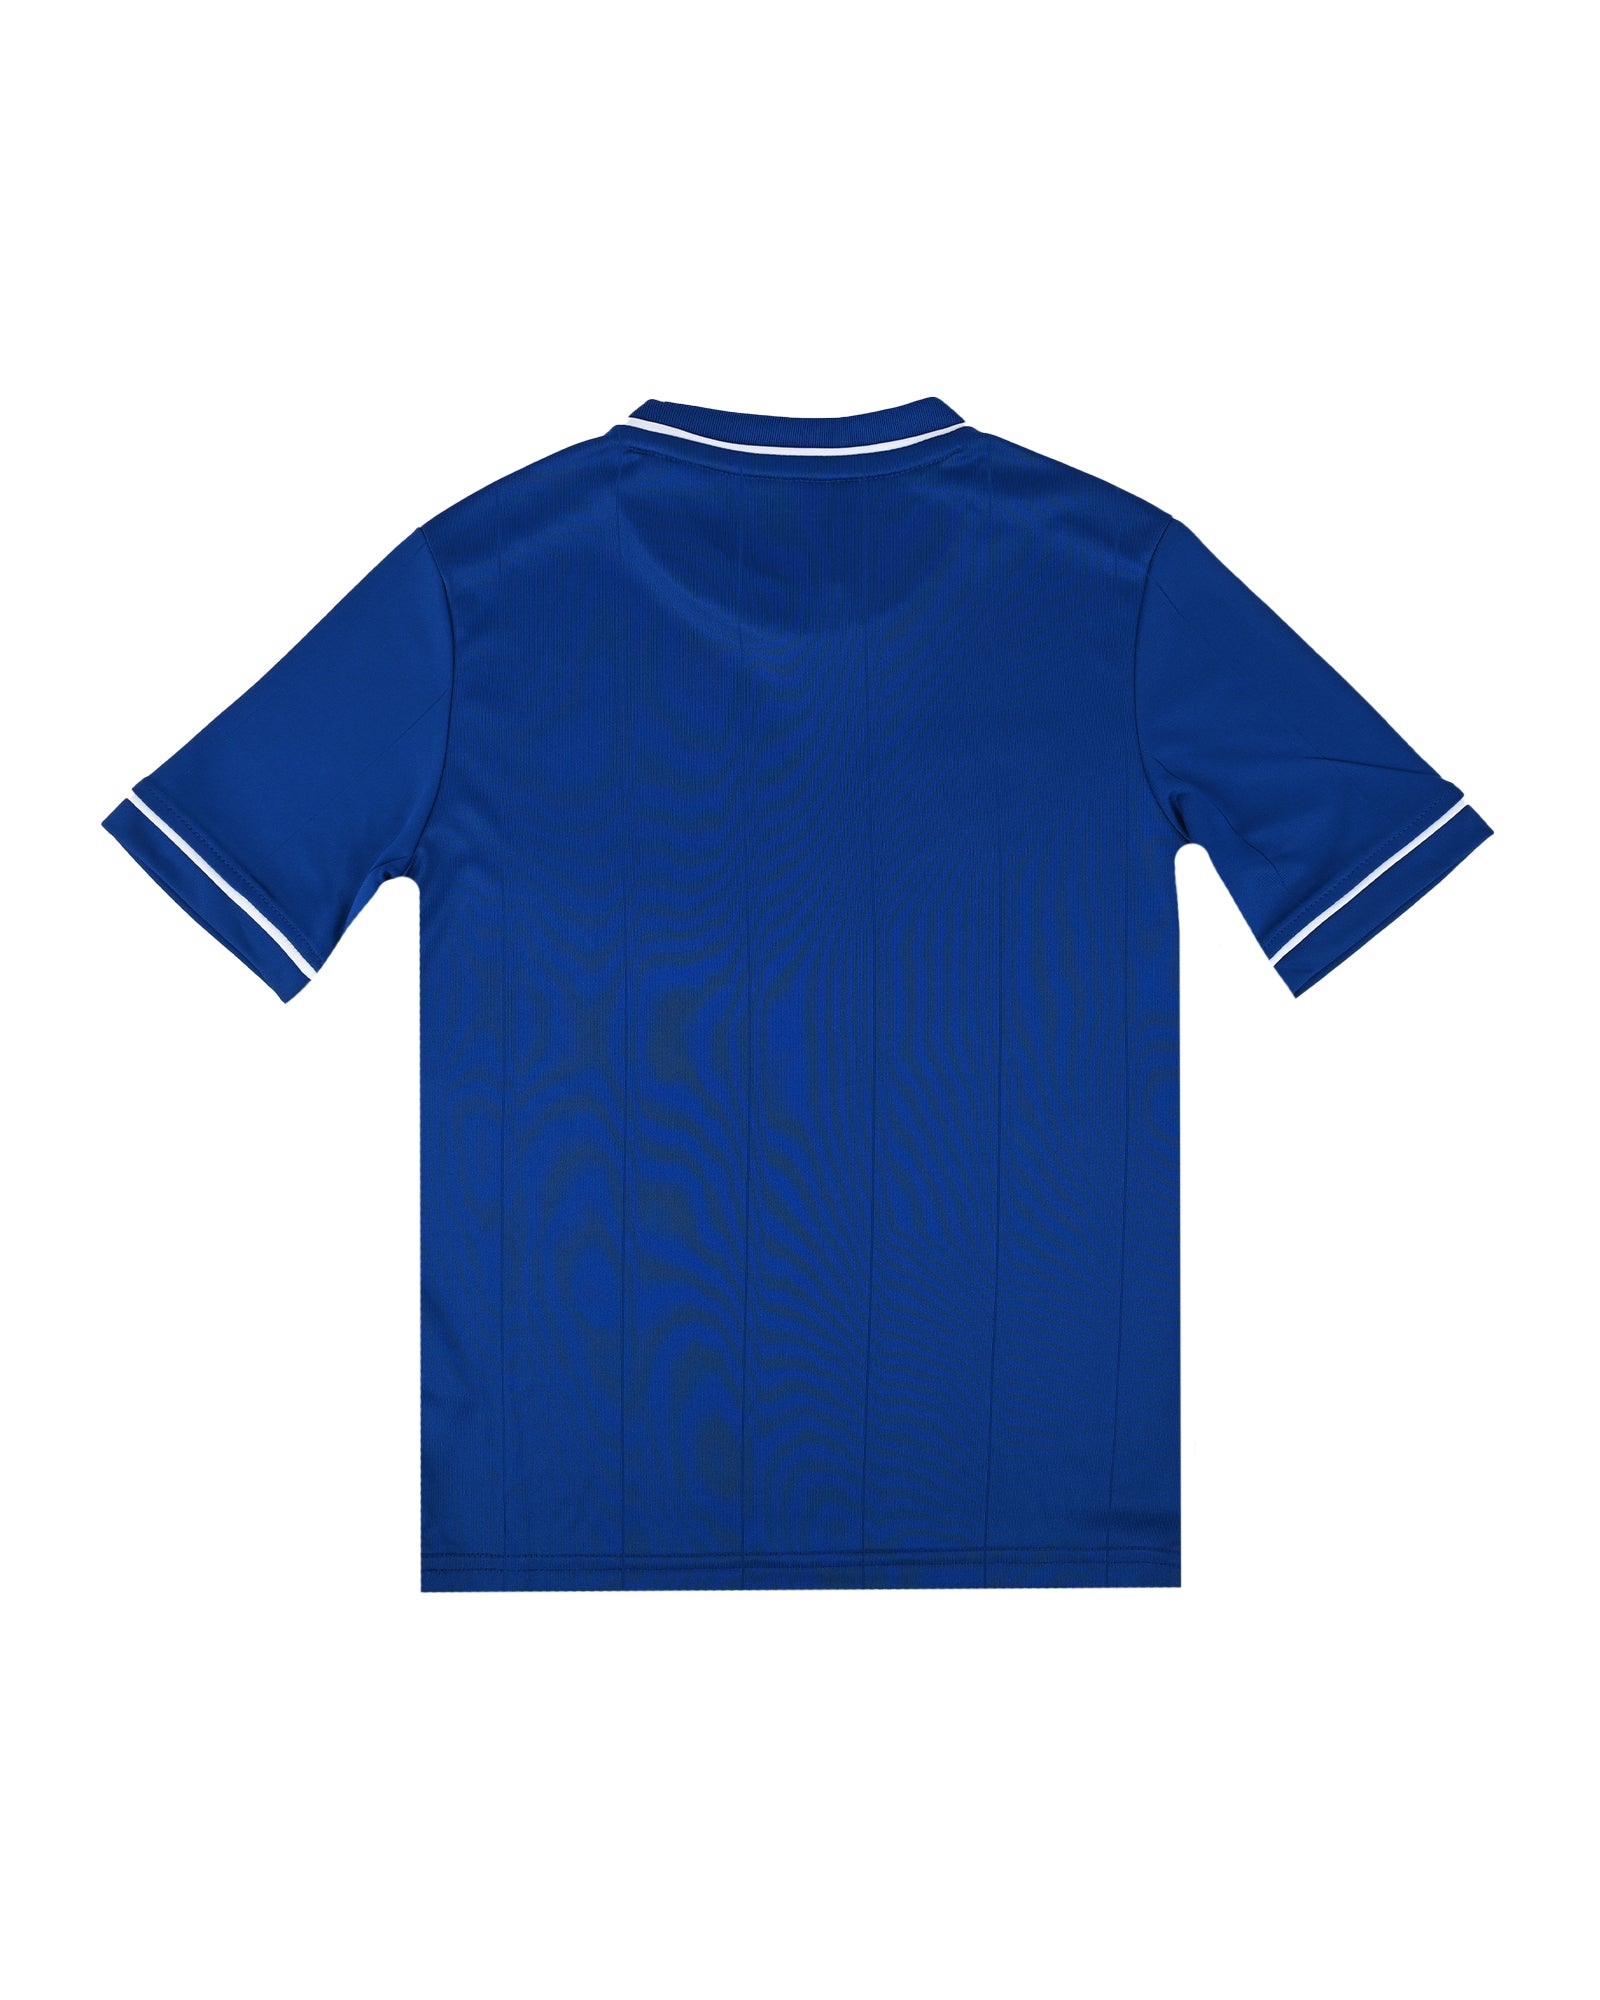 Boys Sports Half Sleeve T-Shirt: Comfortable and Stylish for Active Boys